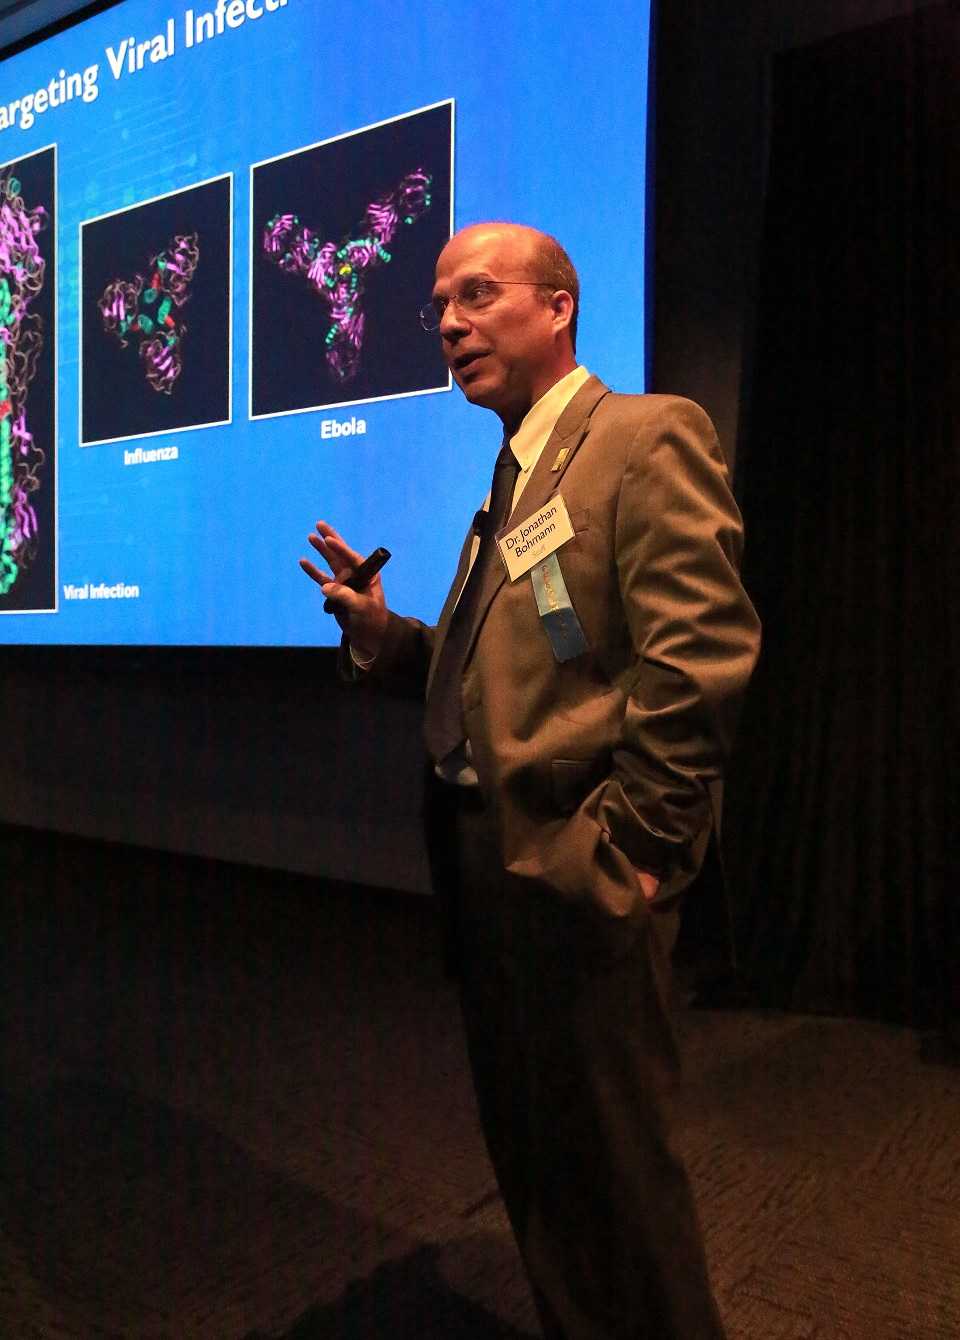 Jonathan Bohmann leading a presentation on the Rhodium